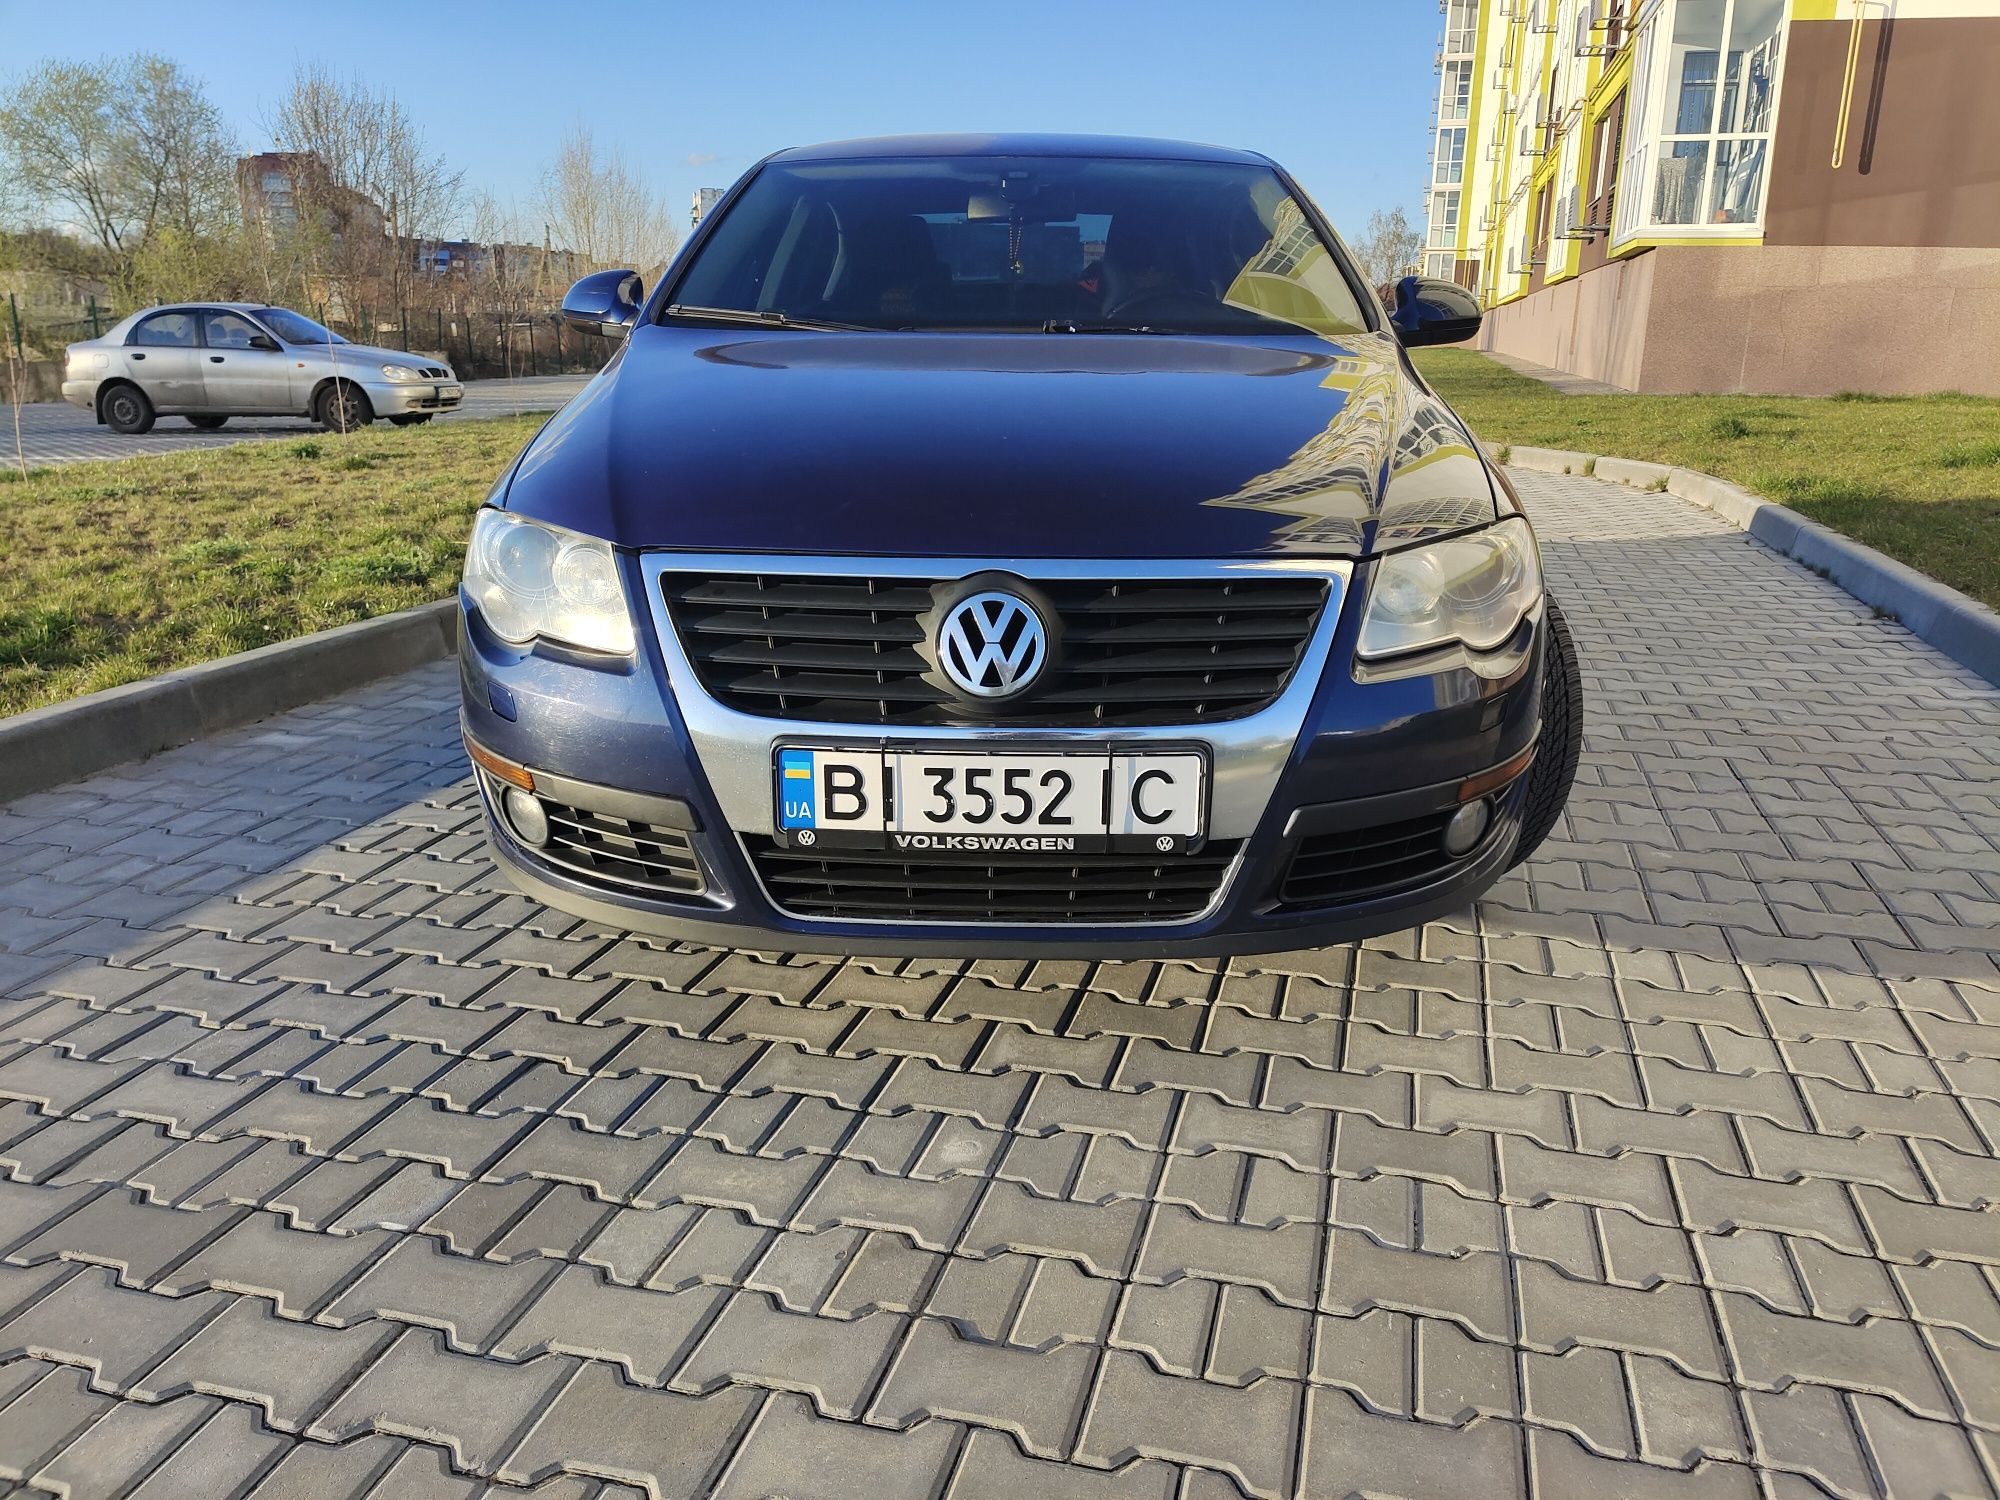 Продам Volkswagen Passat b6